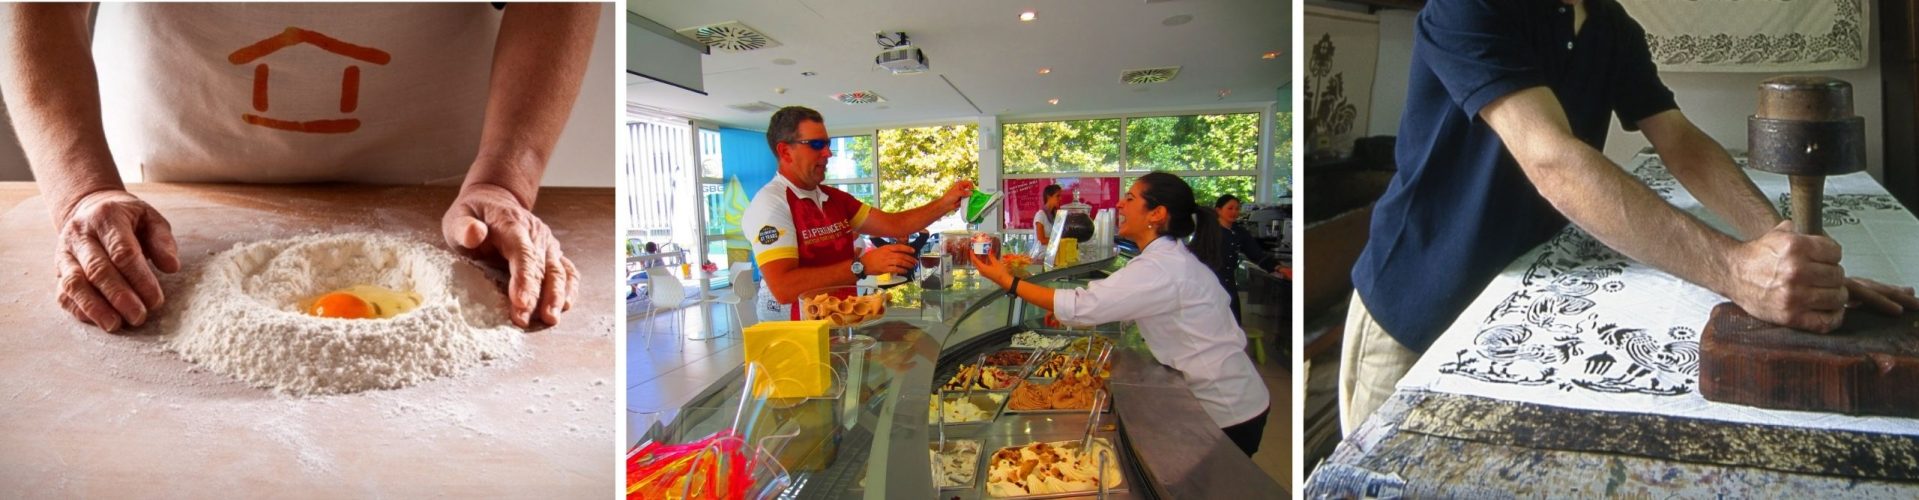 Romagna Mia: bicycling & farmhouse staying